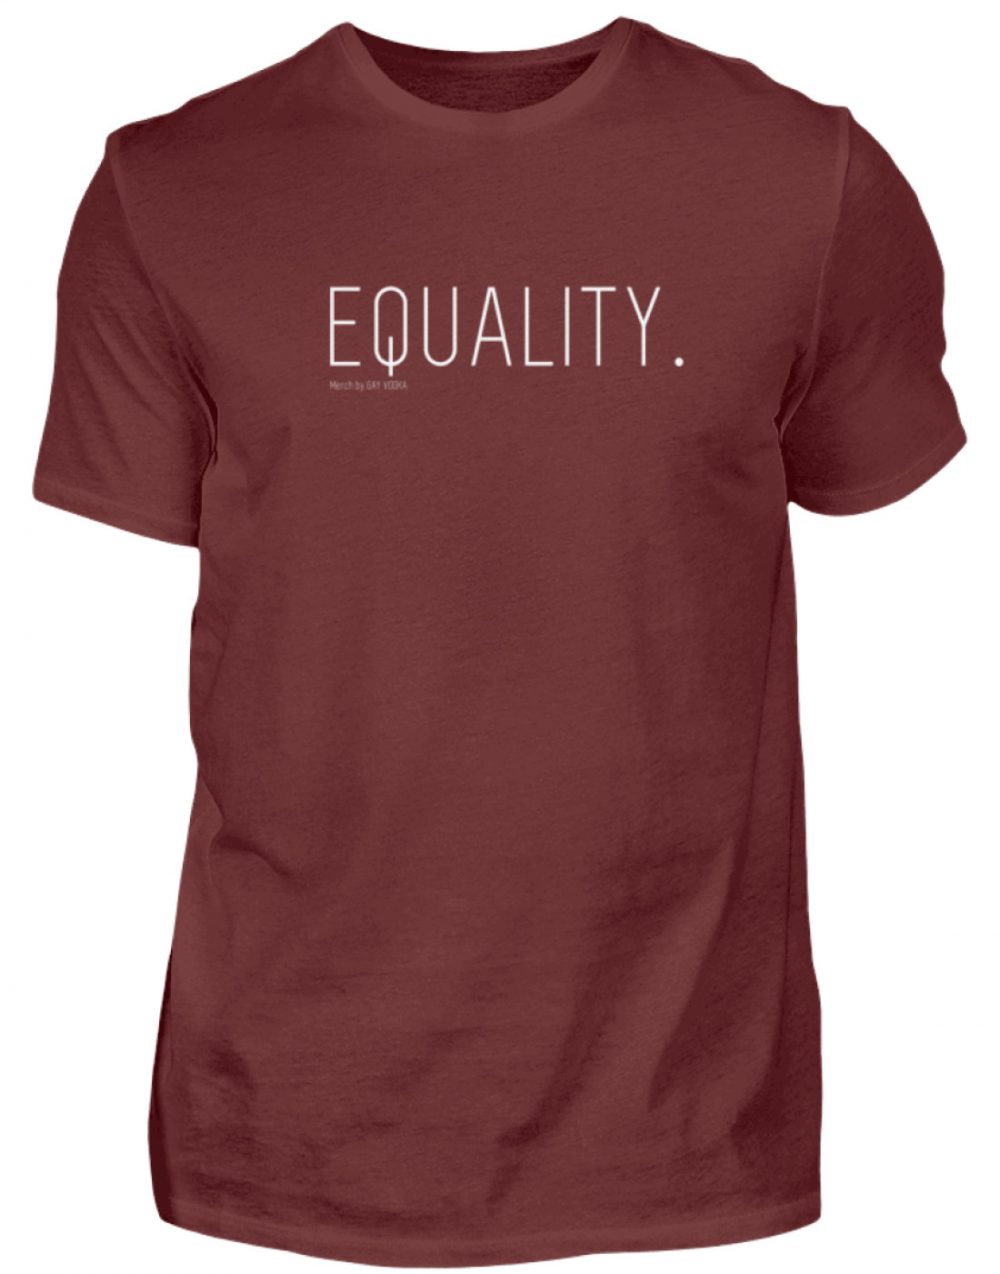 EQUALITY. - Herren Premiumshirt-3192